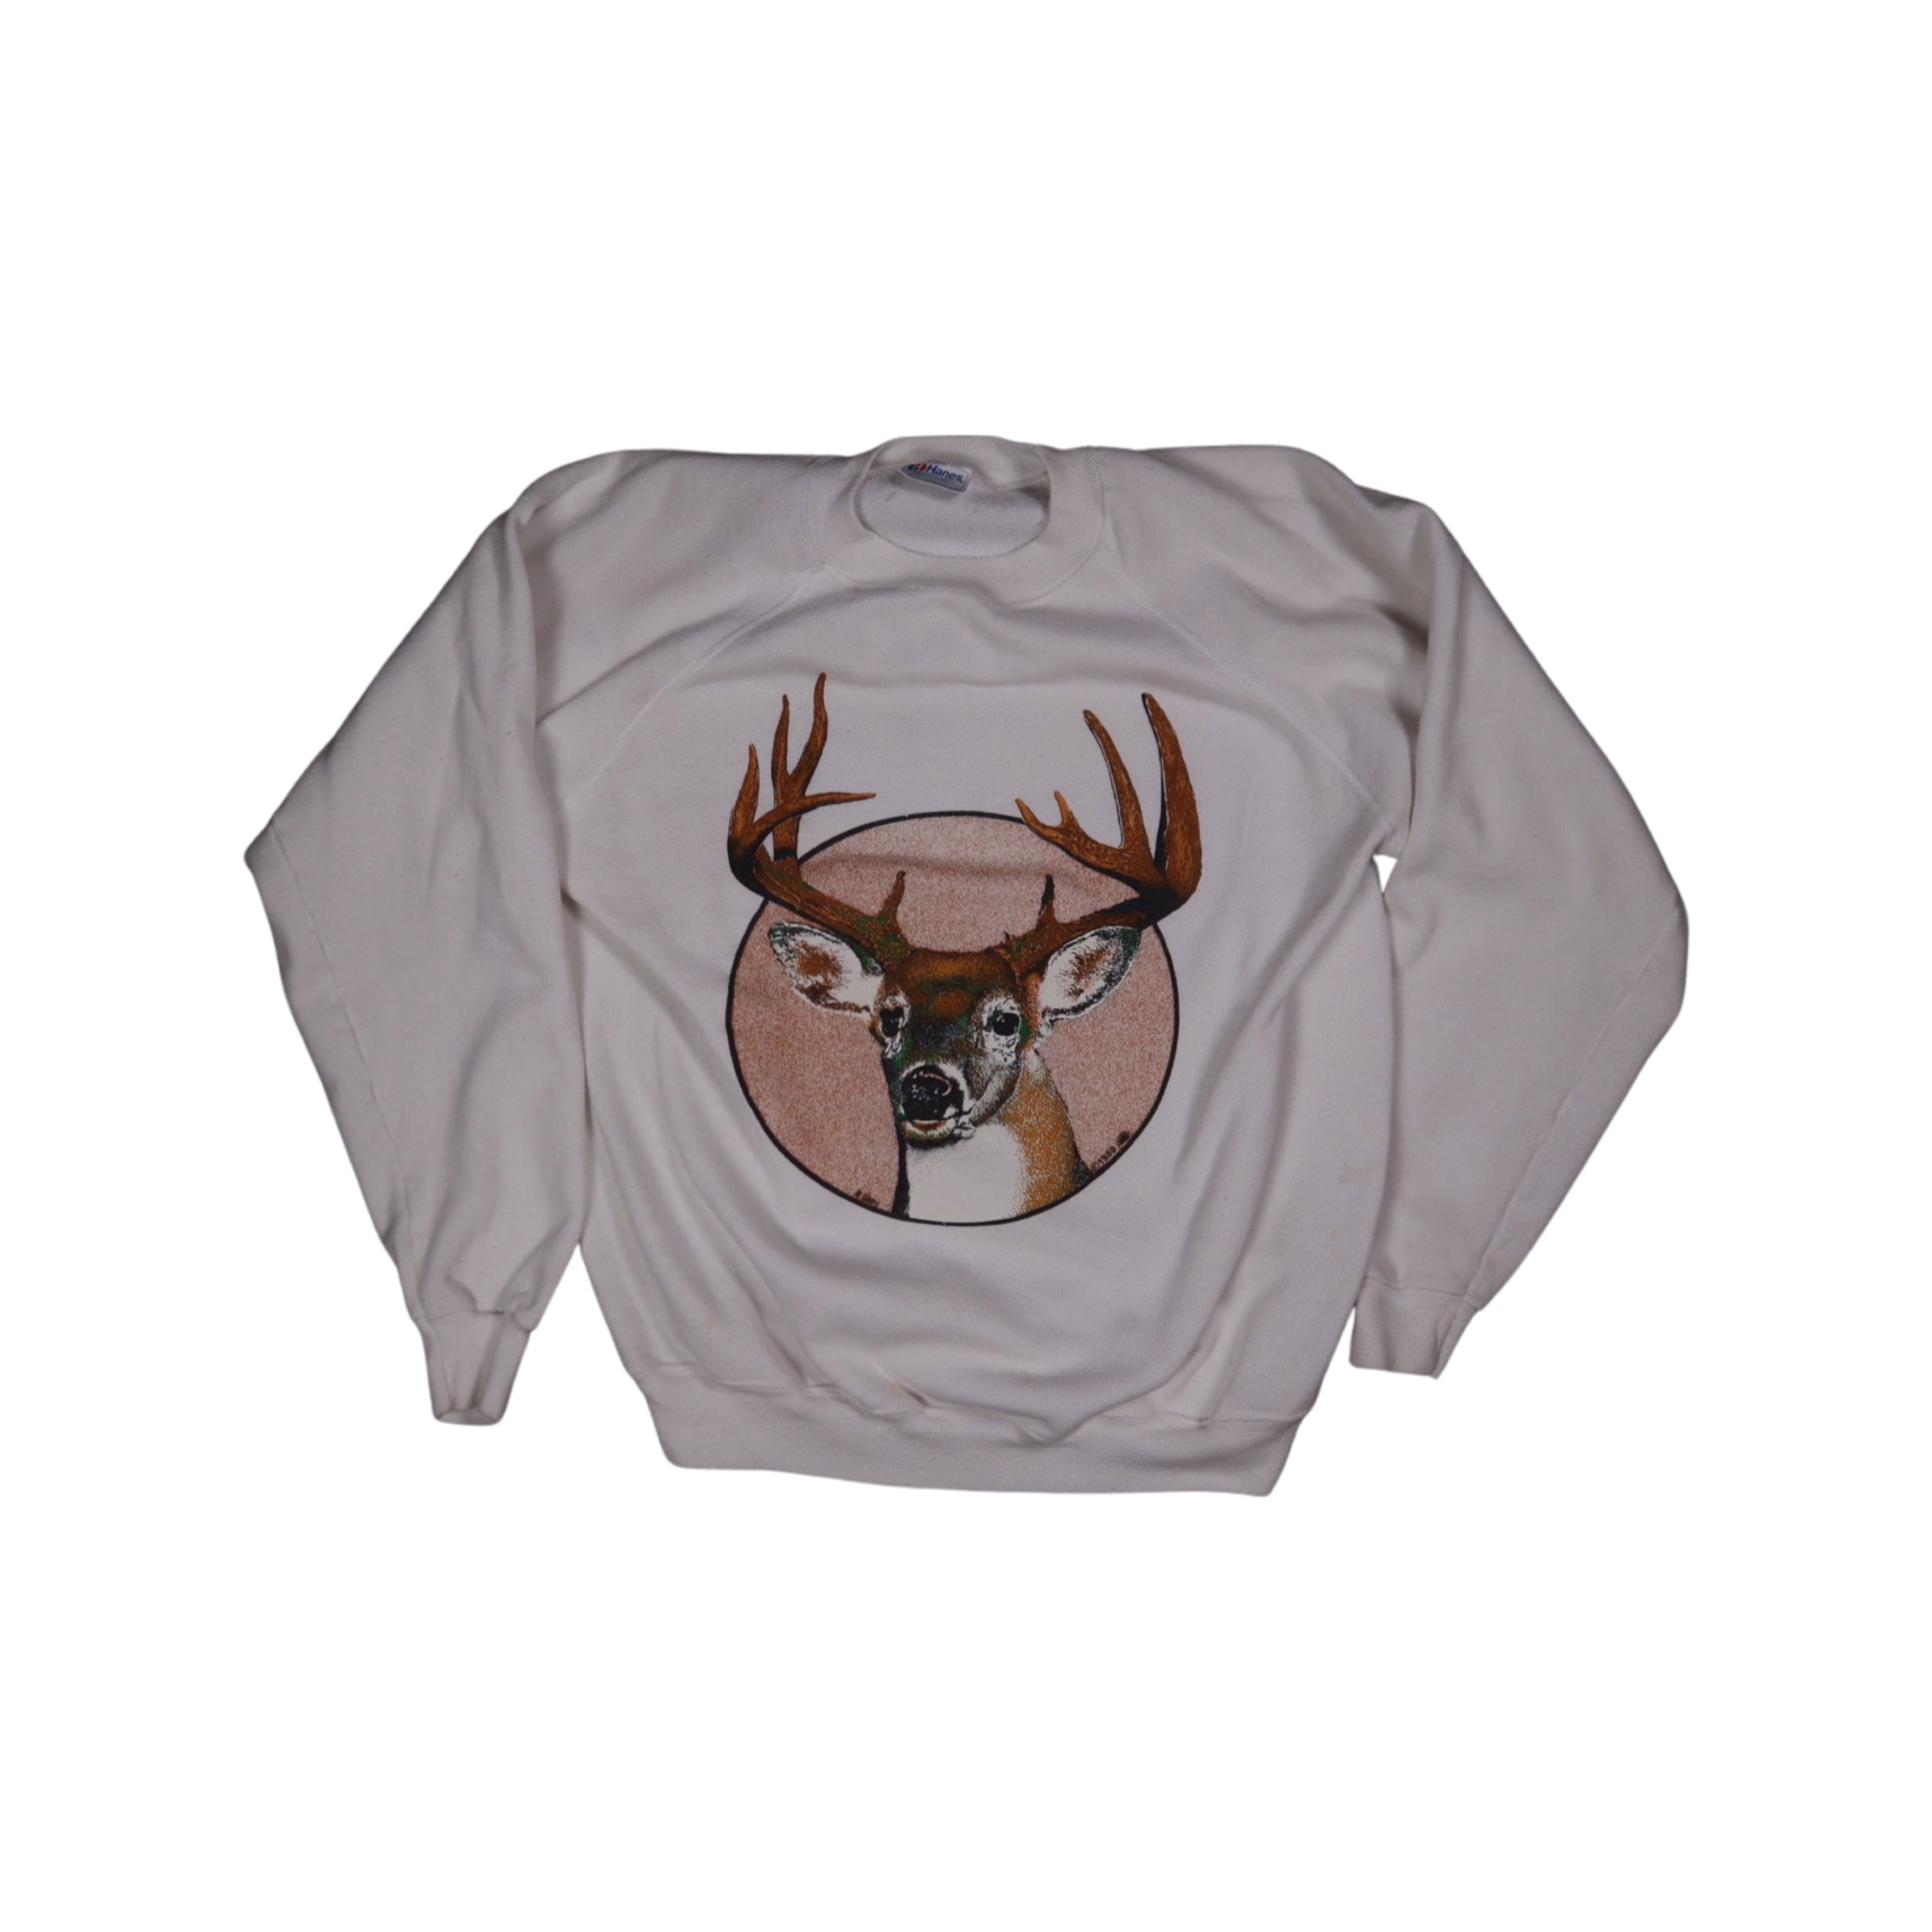 Deer 80s Sweater (Medium)